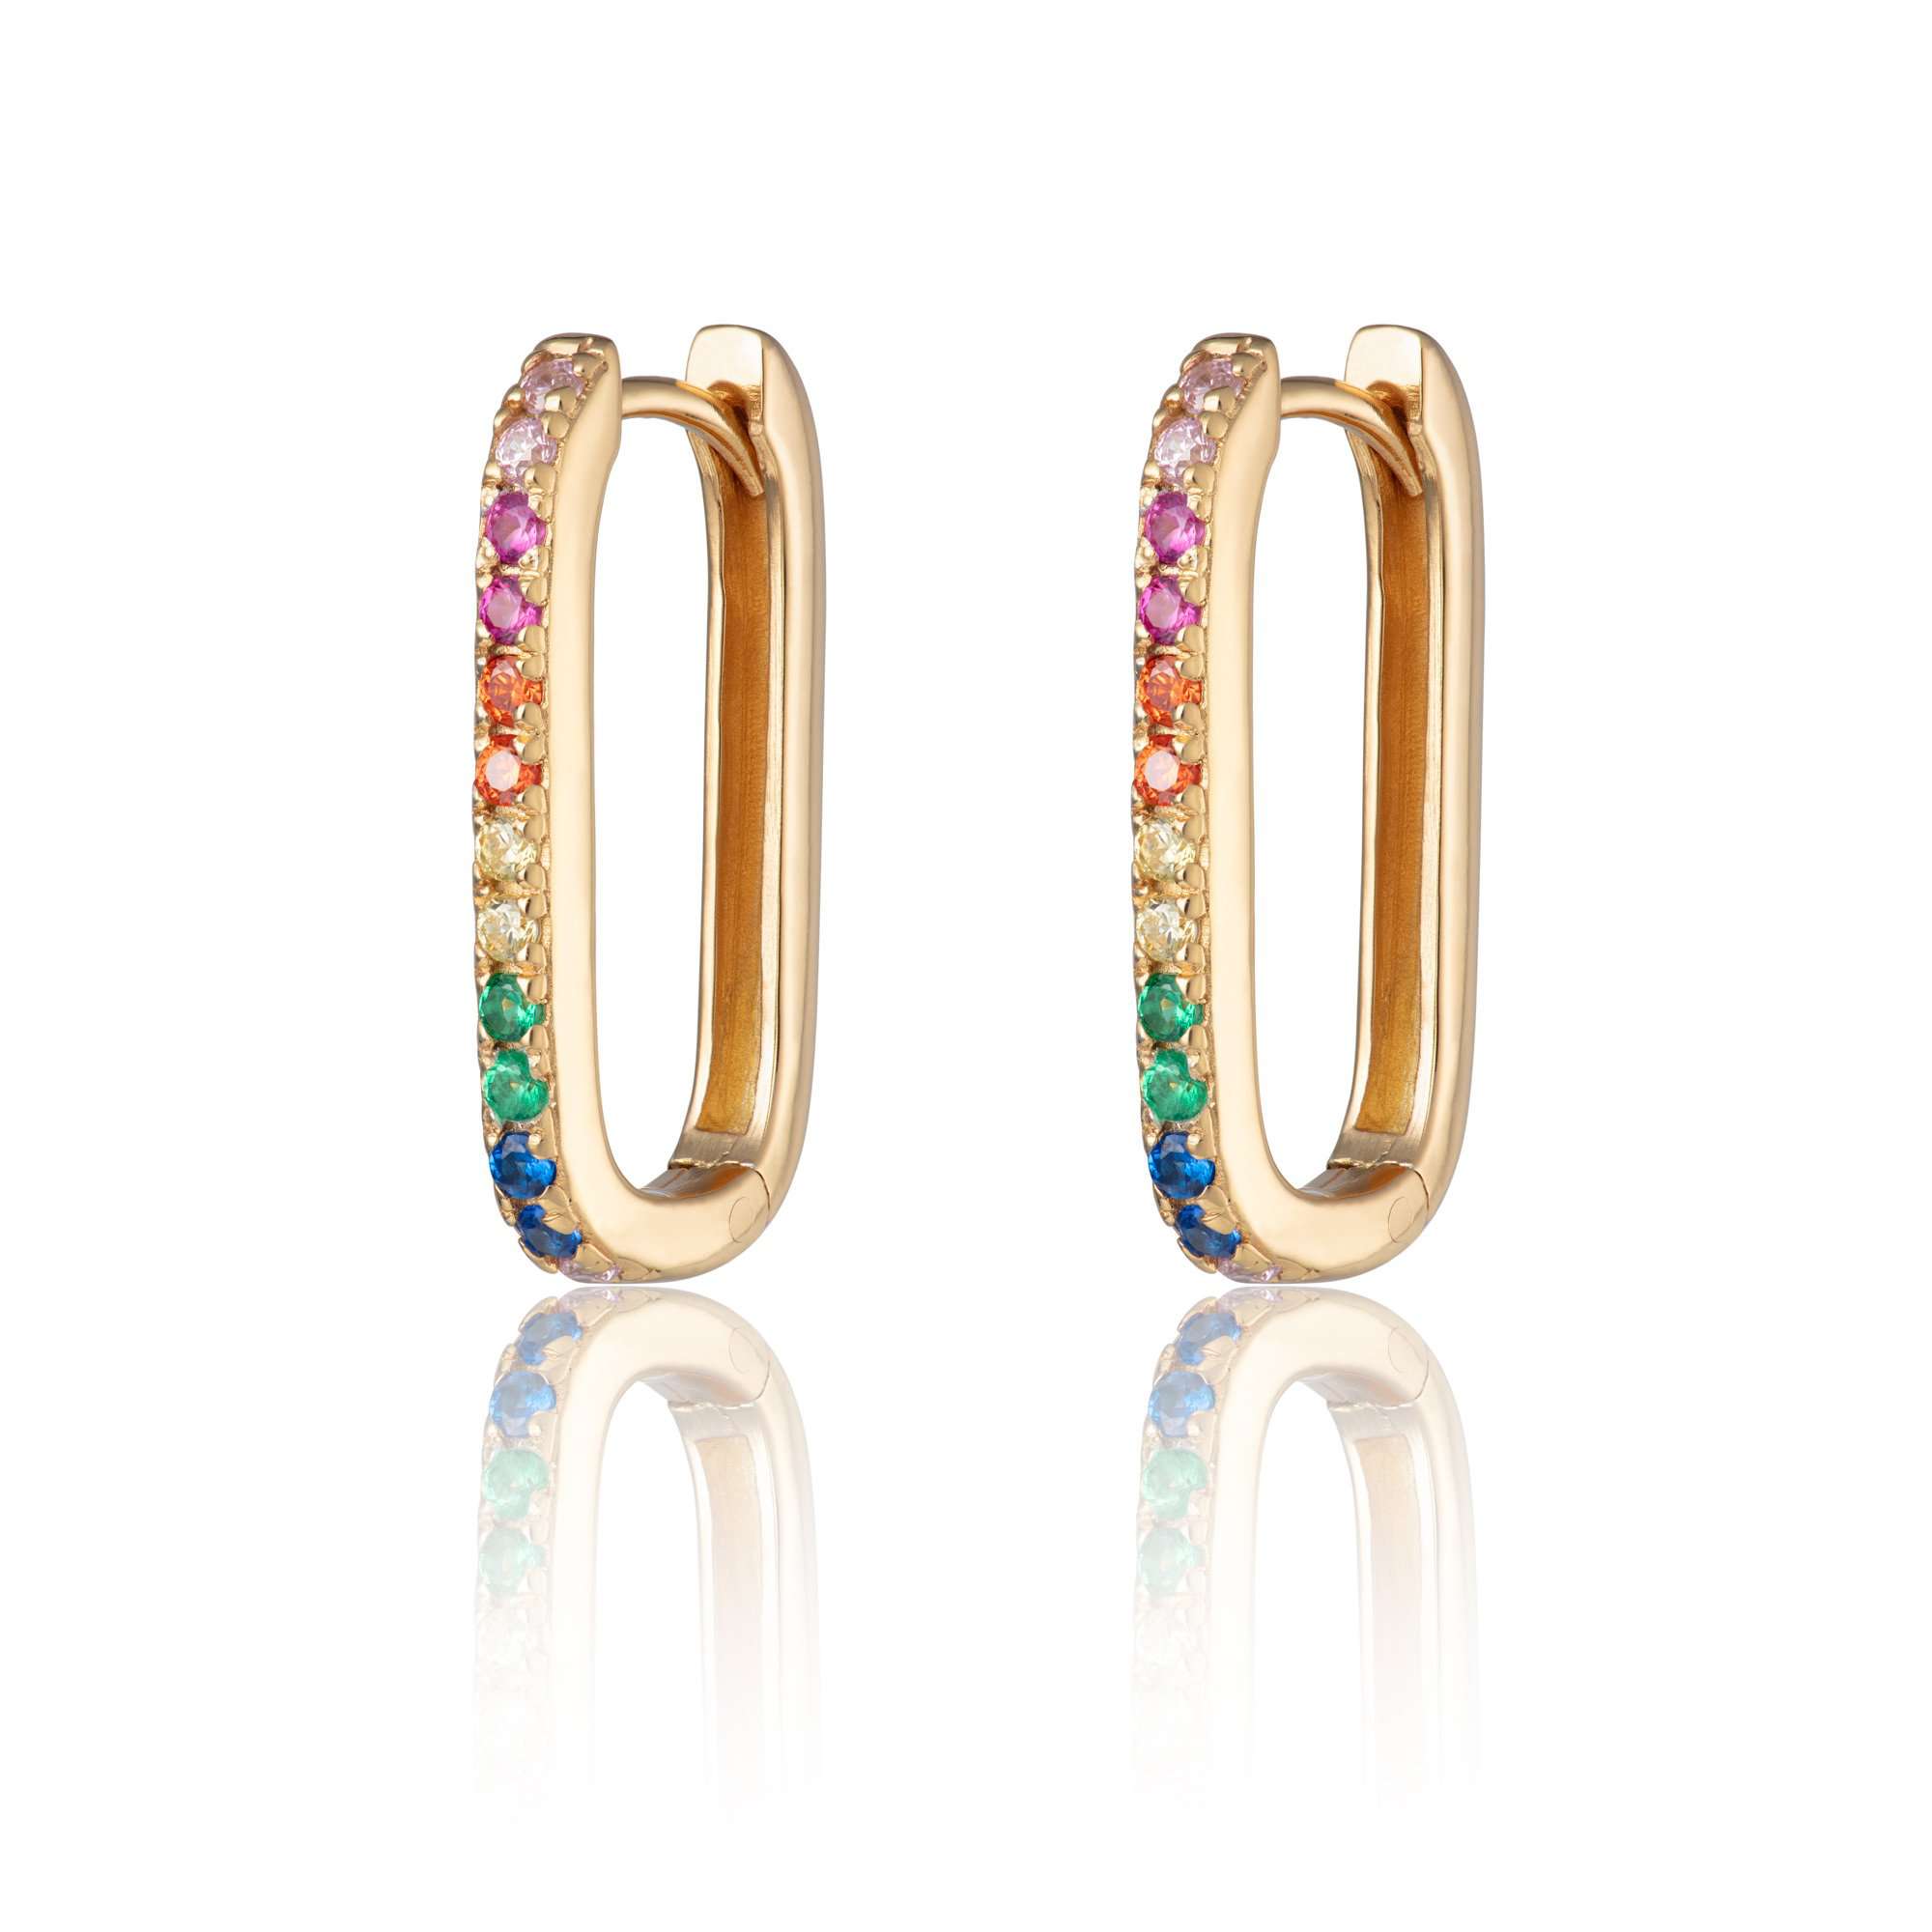 Oval Hoop Earrings with Rainbow Stones